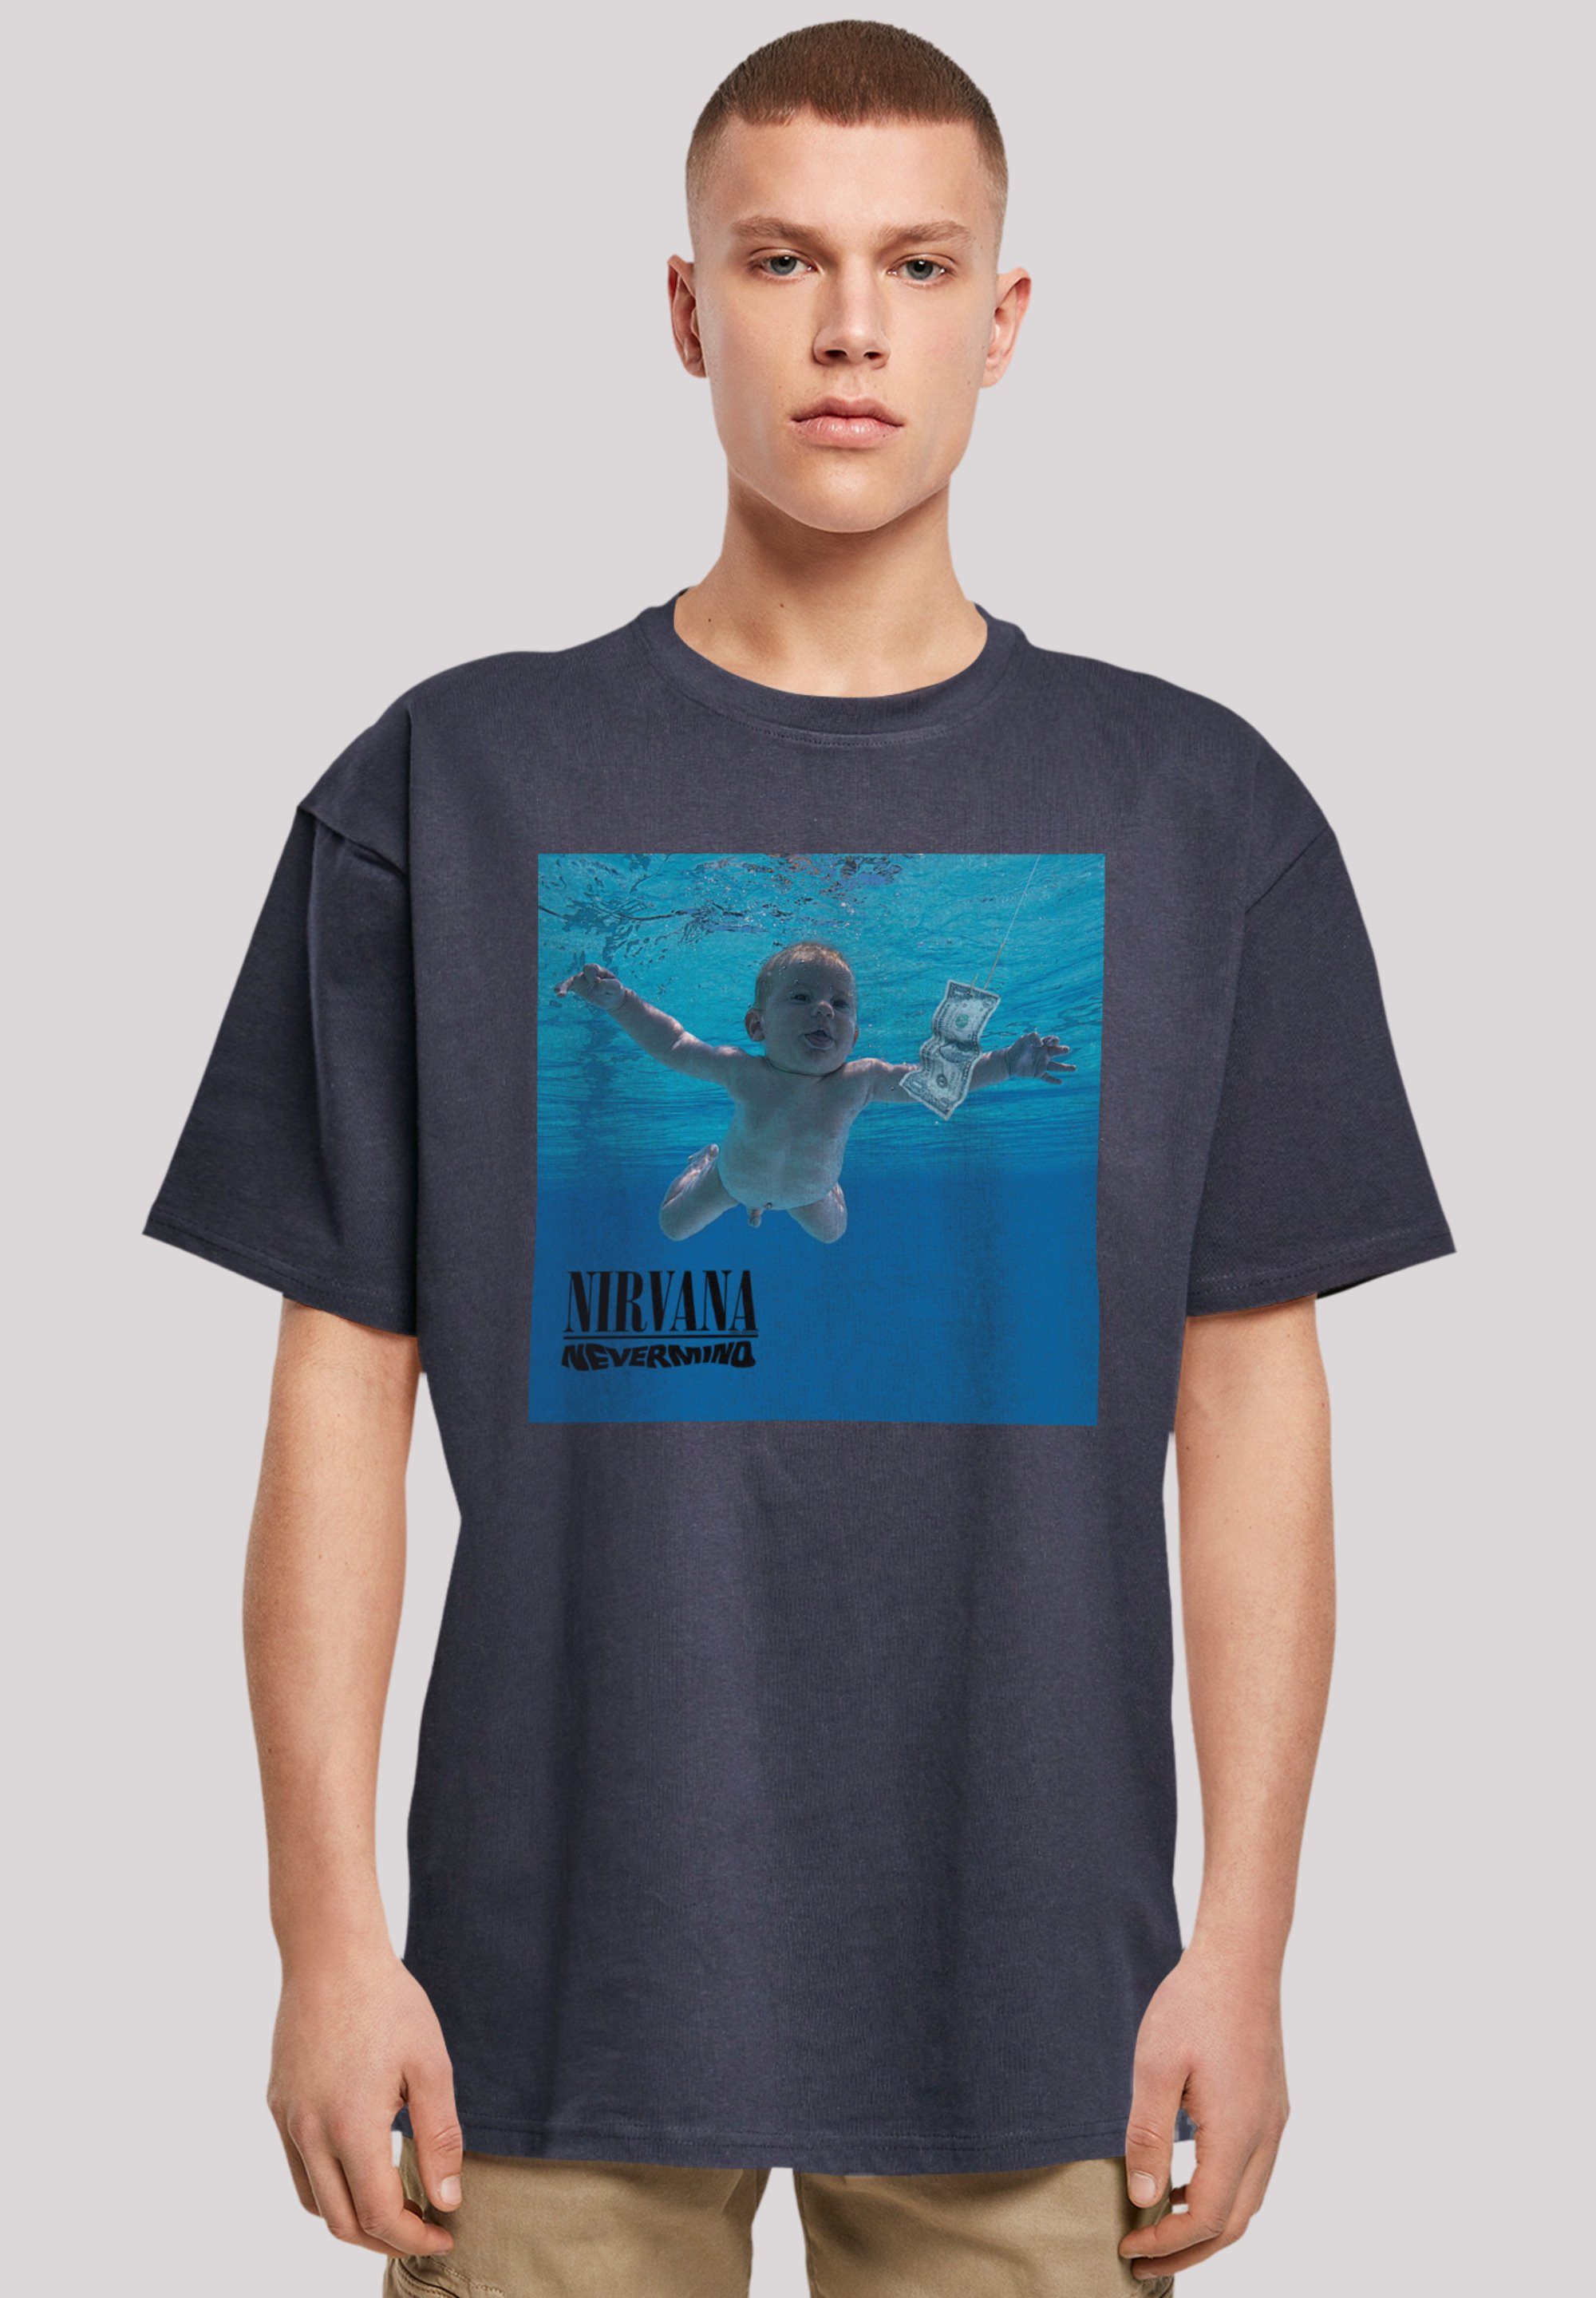 Qualität Nevermind navy Nirvana Premium Rock T-Shirt Album F4NT4STIC Band